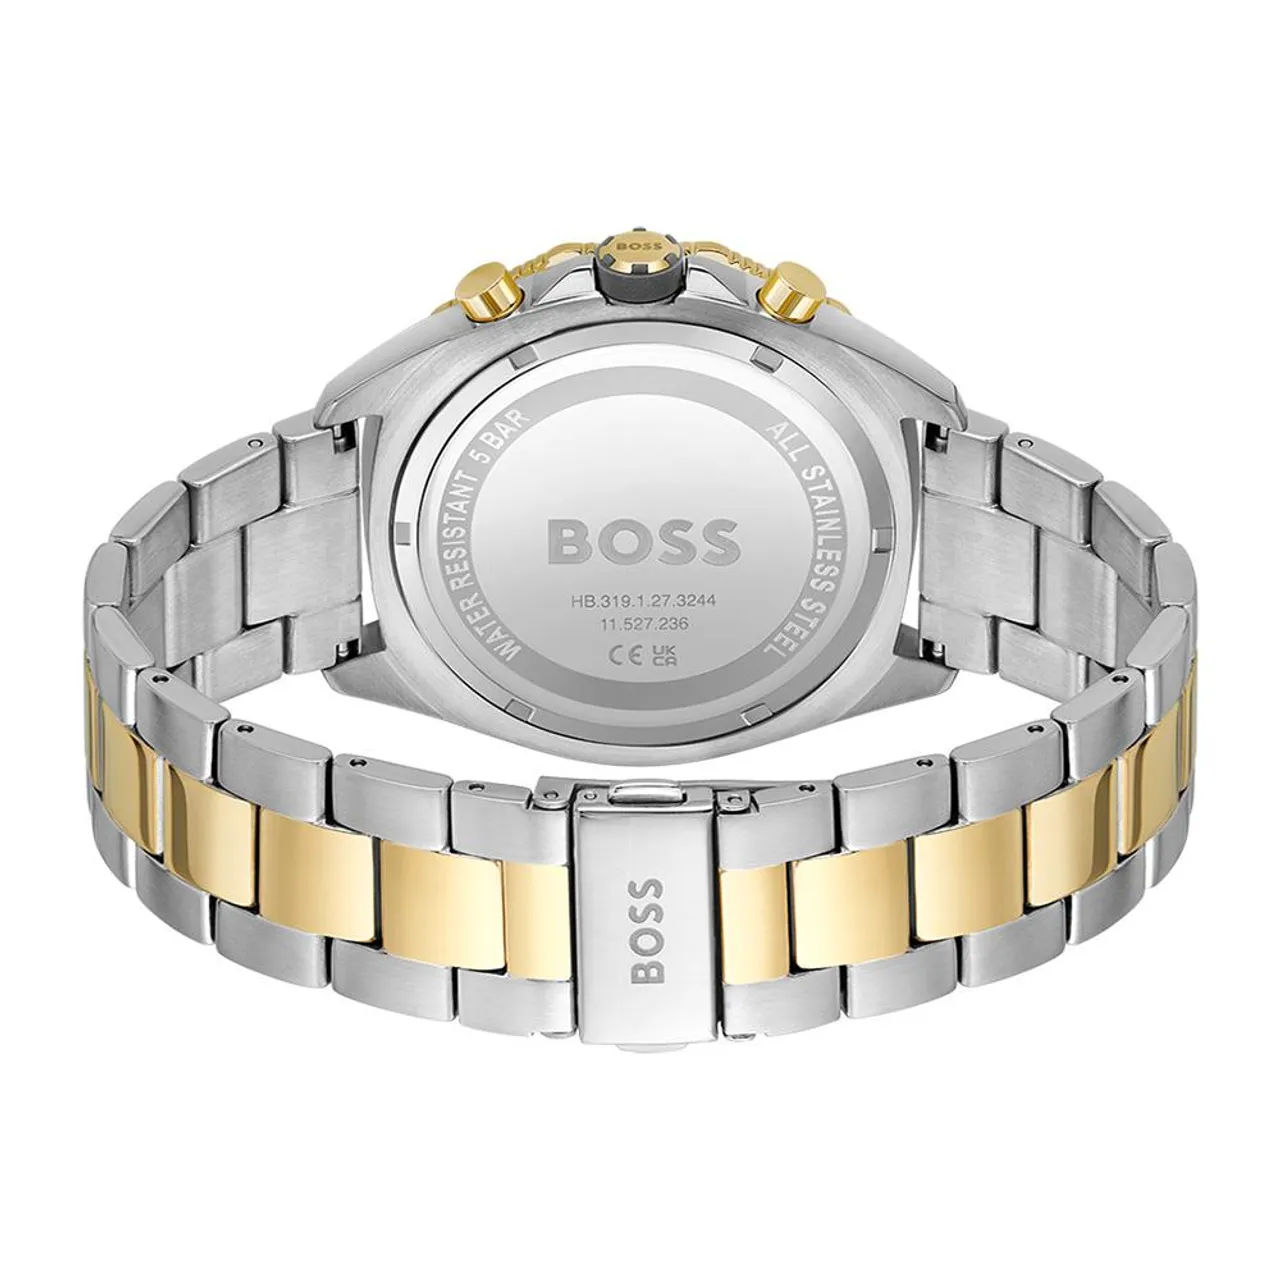 Hugo Boss 1513974 Energy Chronograph Men's Watch